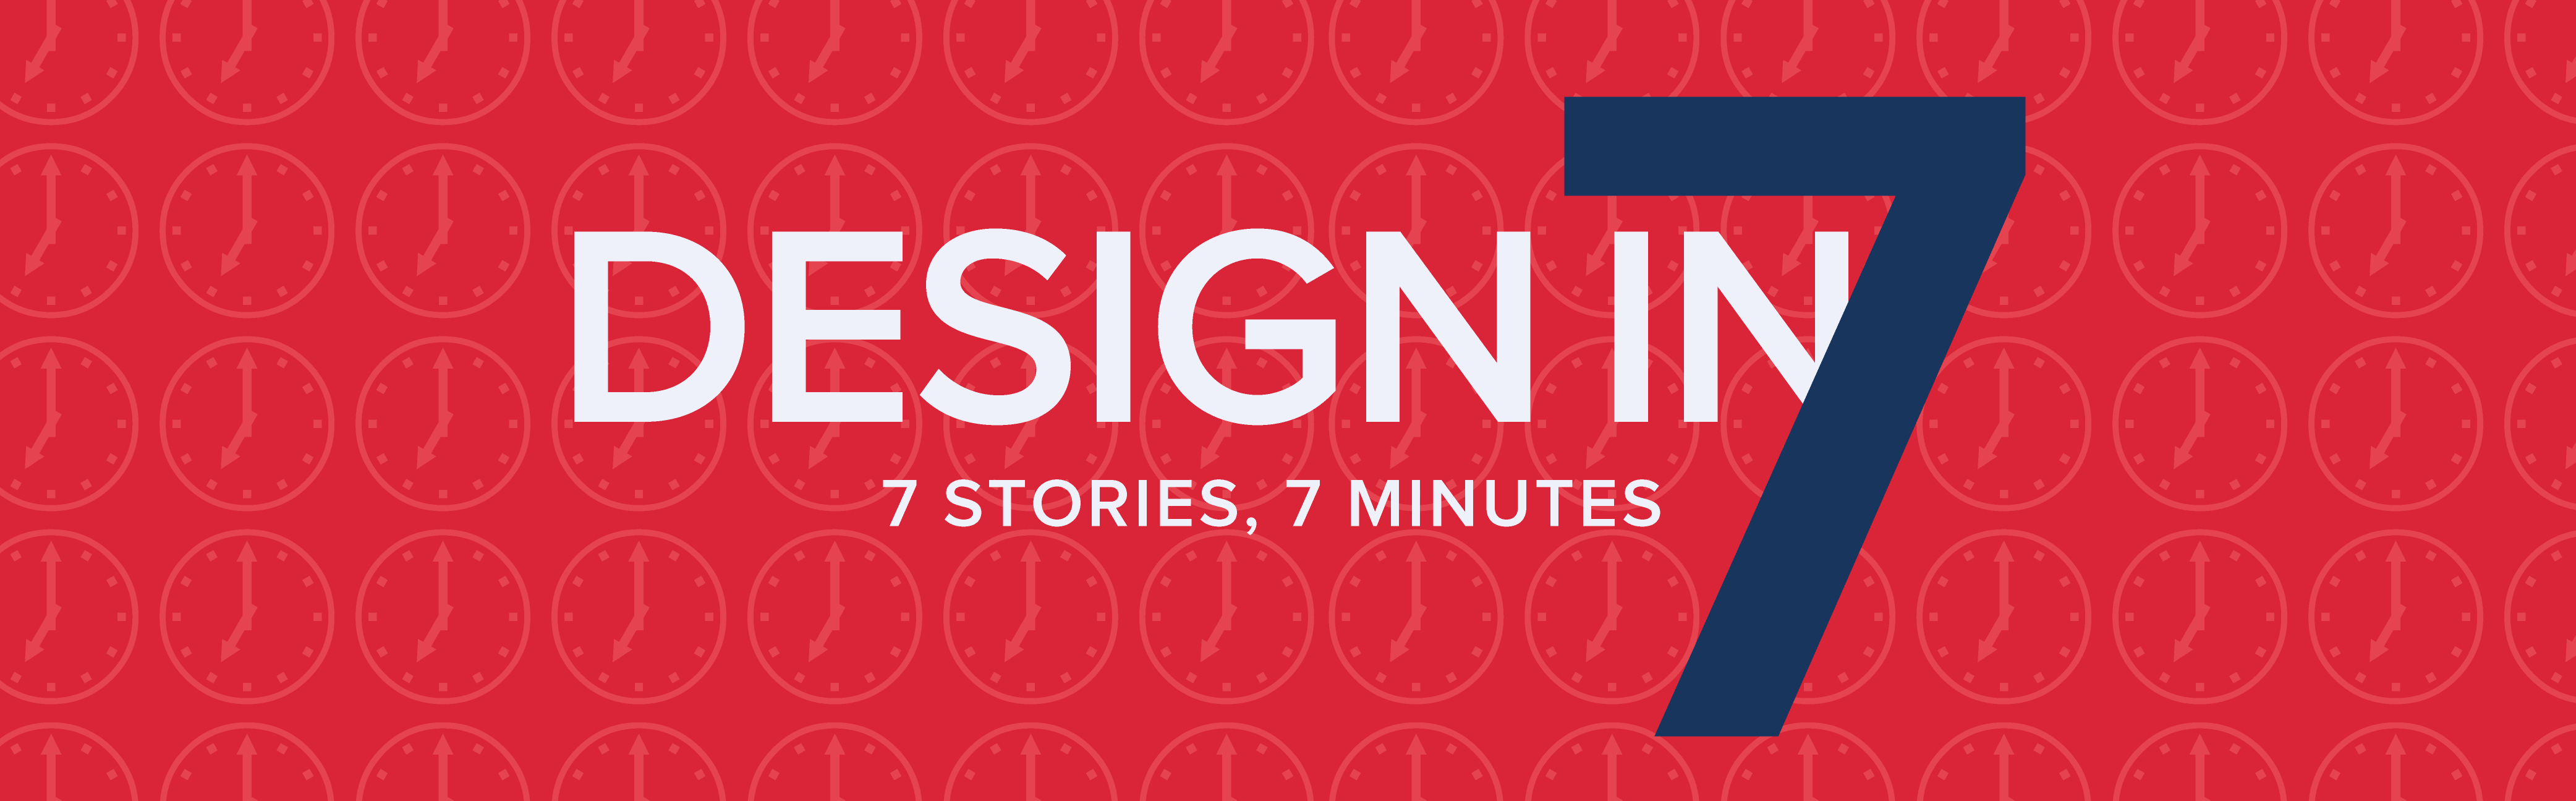 Design in 7: 7 Stories, 7 Minutes